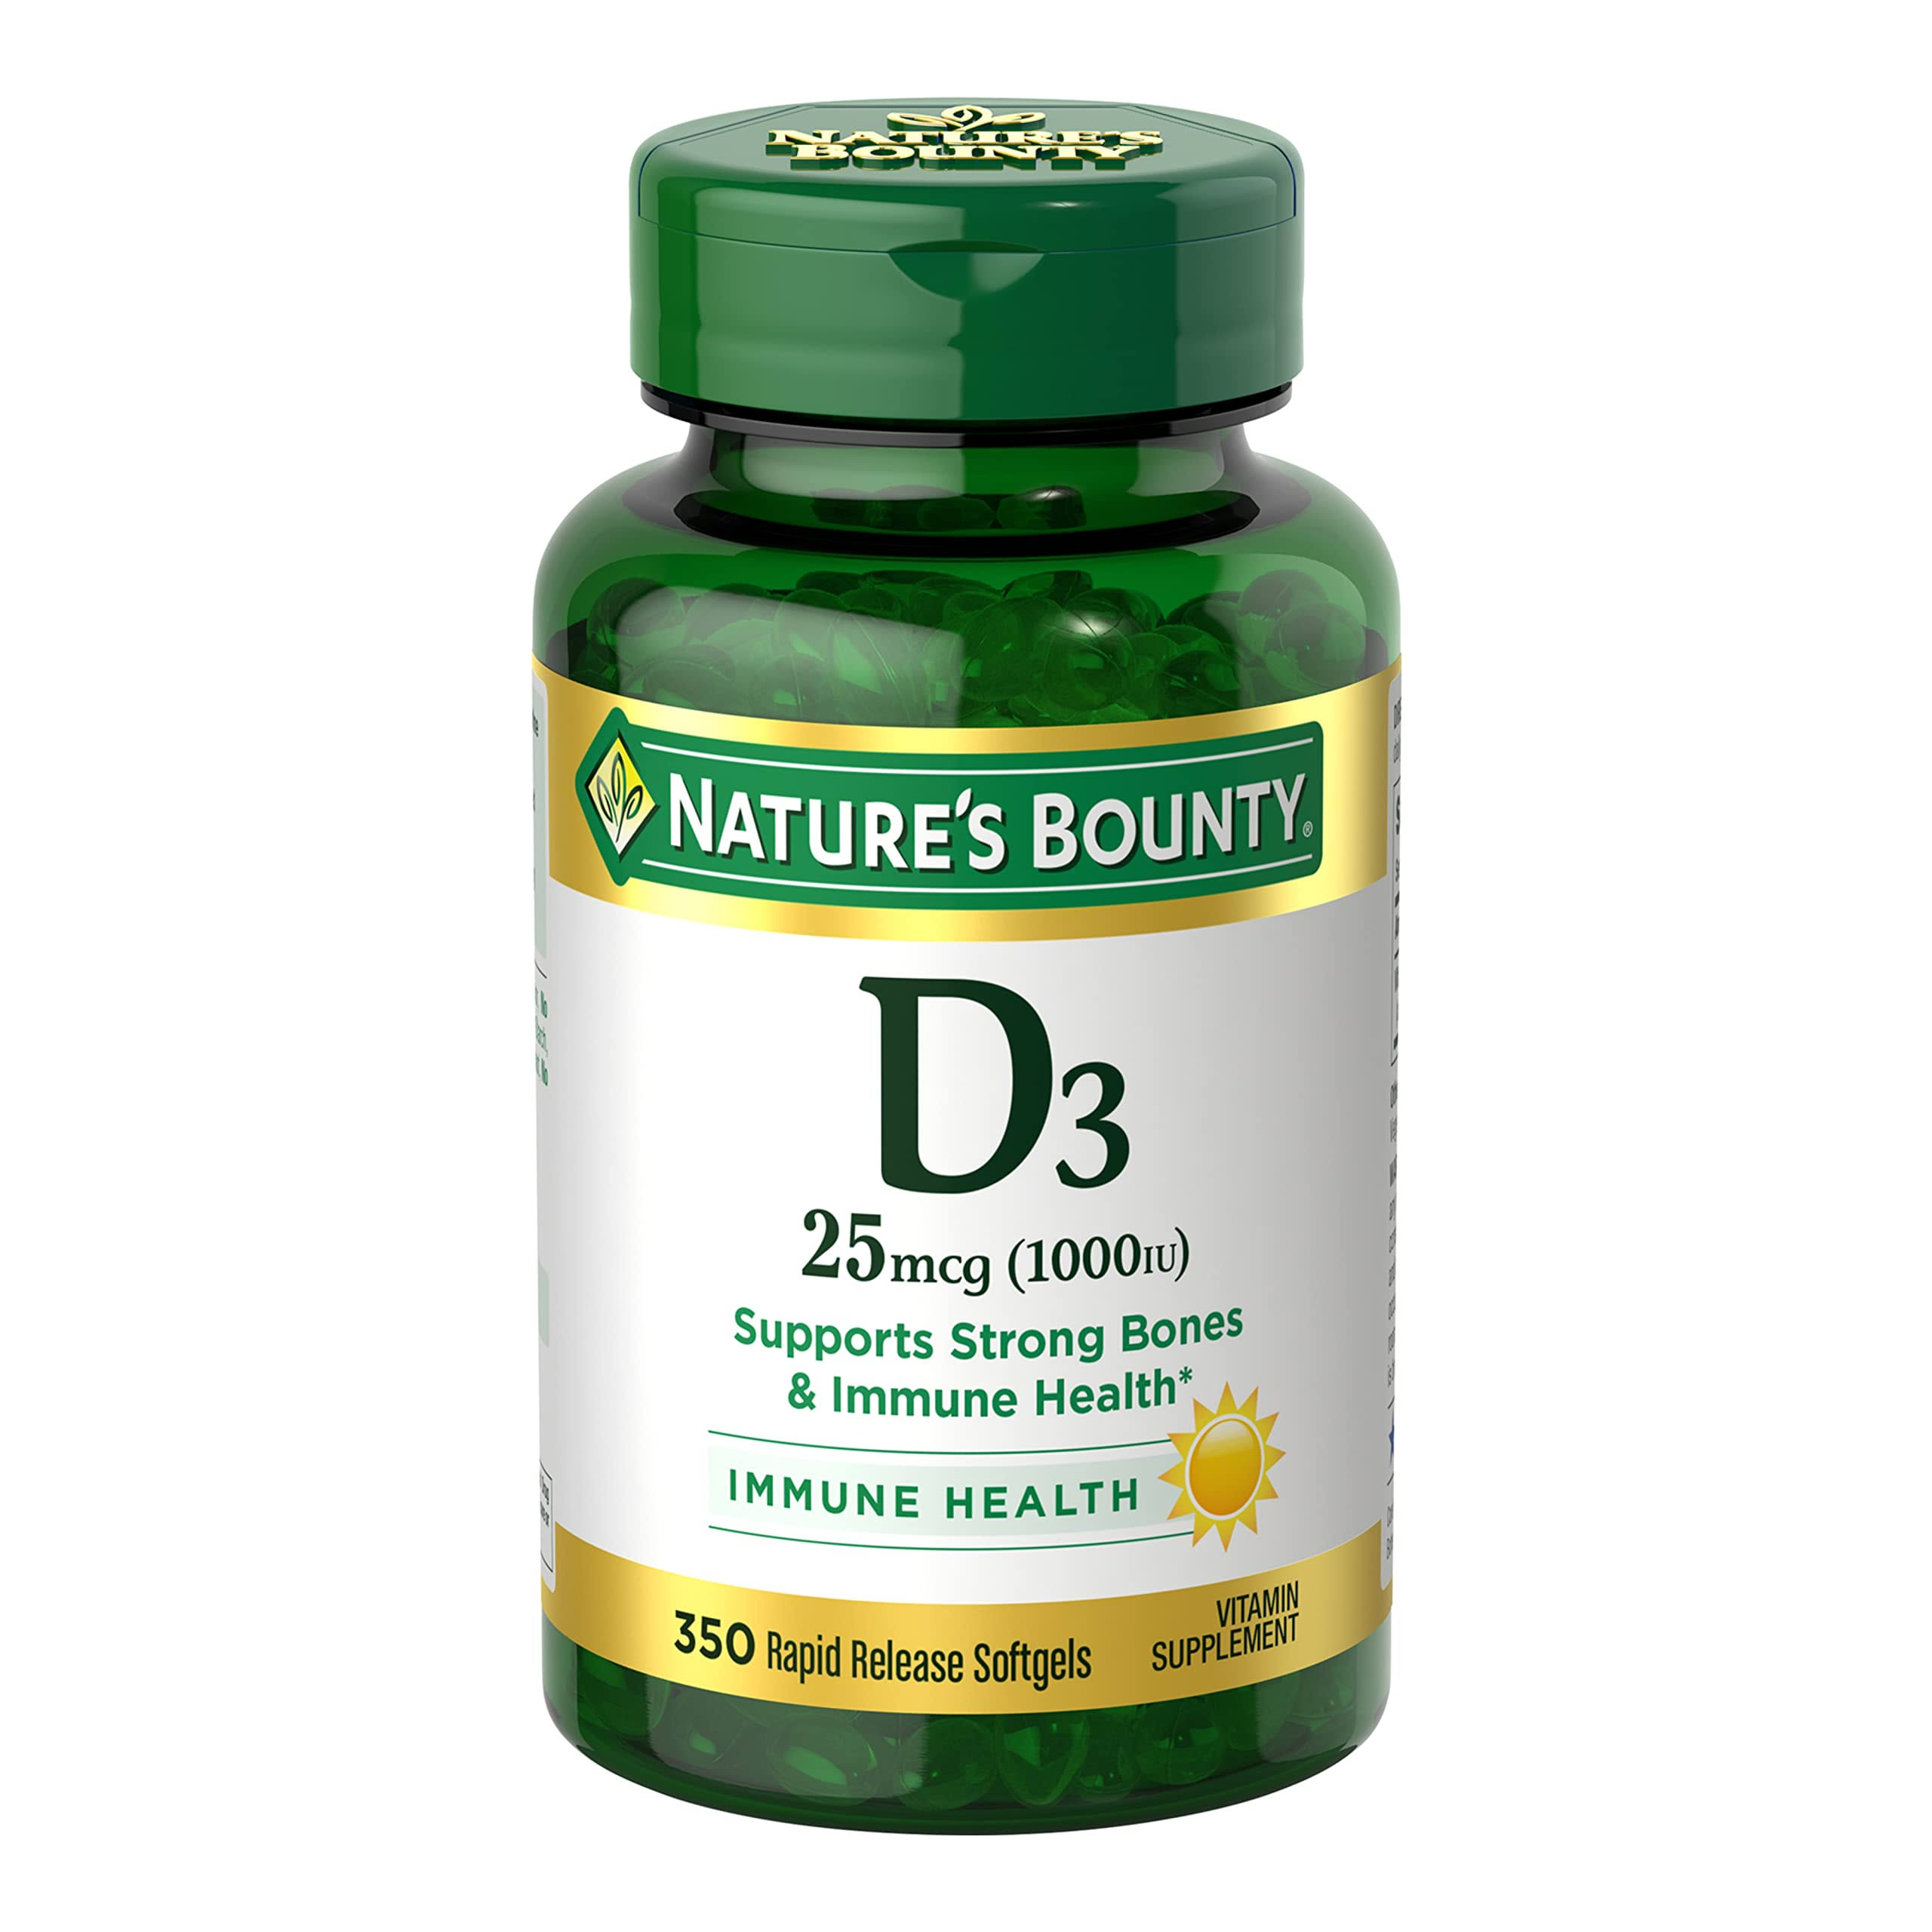 Nature's Bounty D3 1000 IU Vitamin Supplement - 350 Rapid Release Softgels